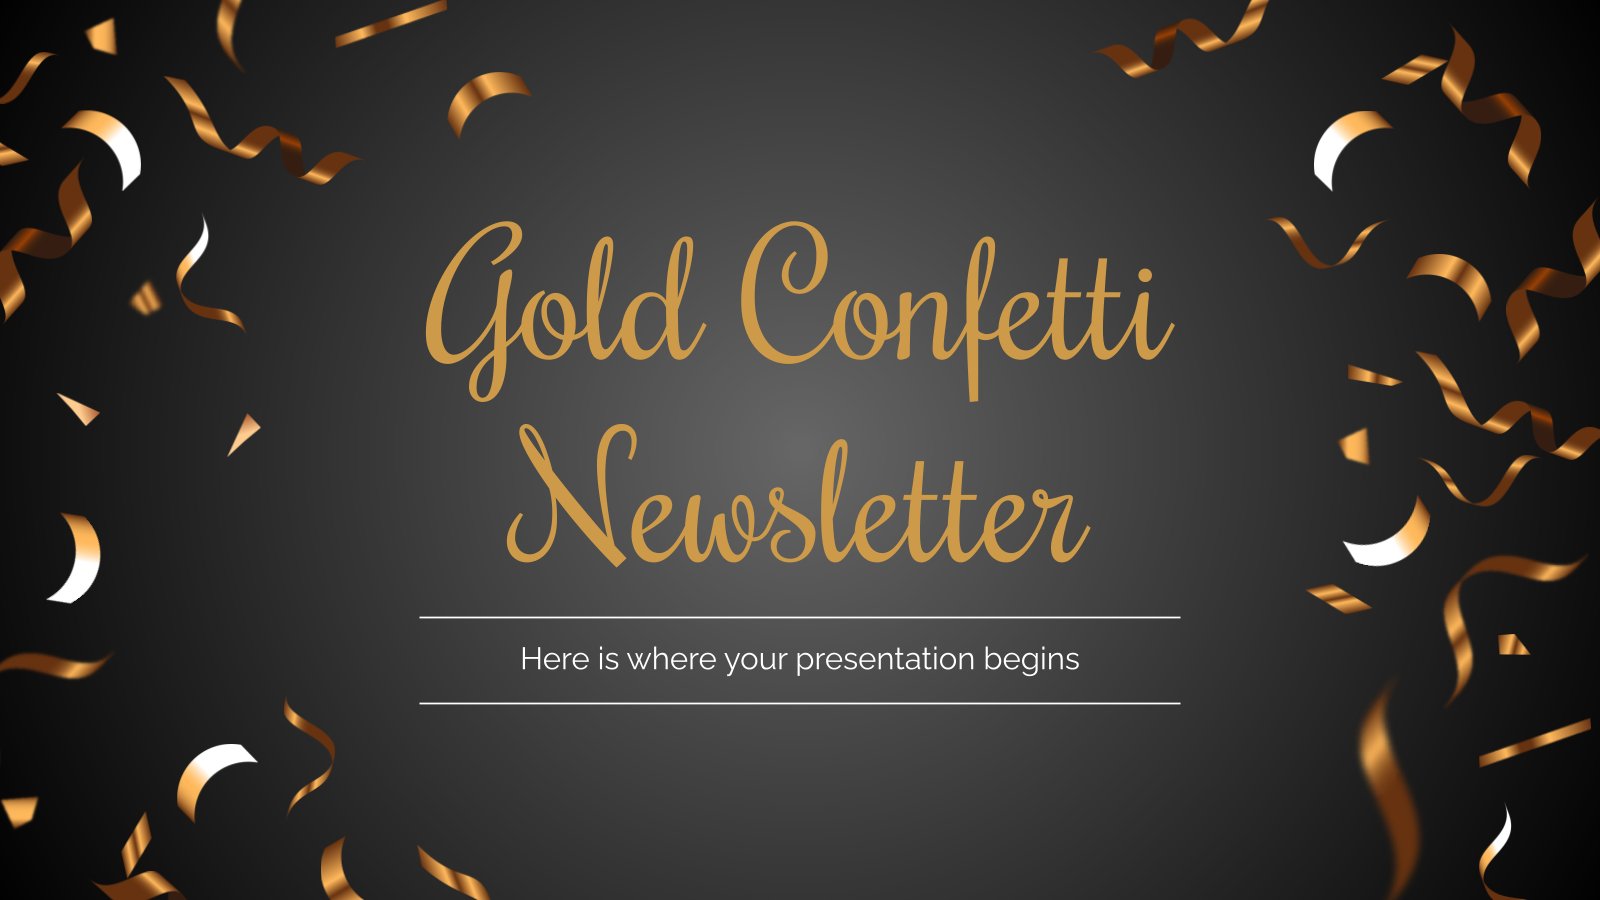 Gold Confetti Newsletter presentation template 